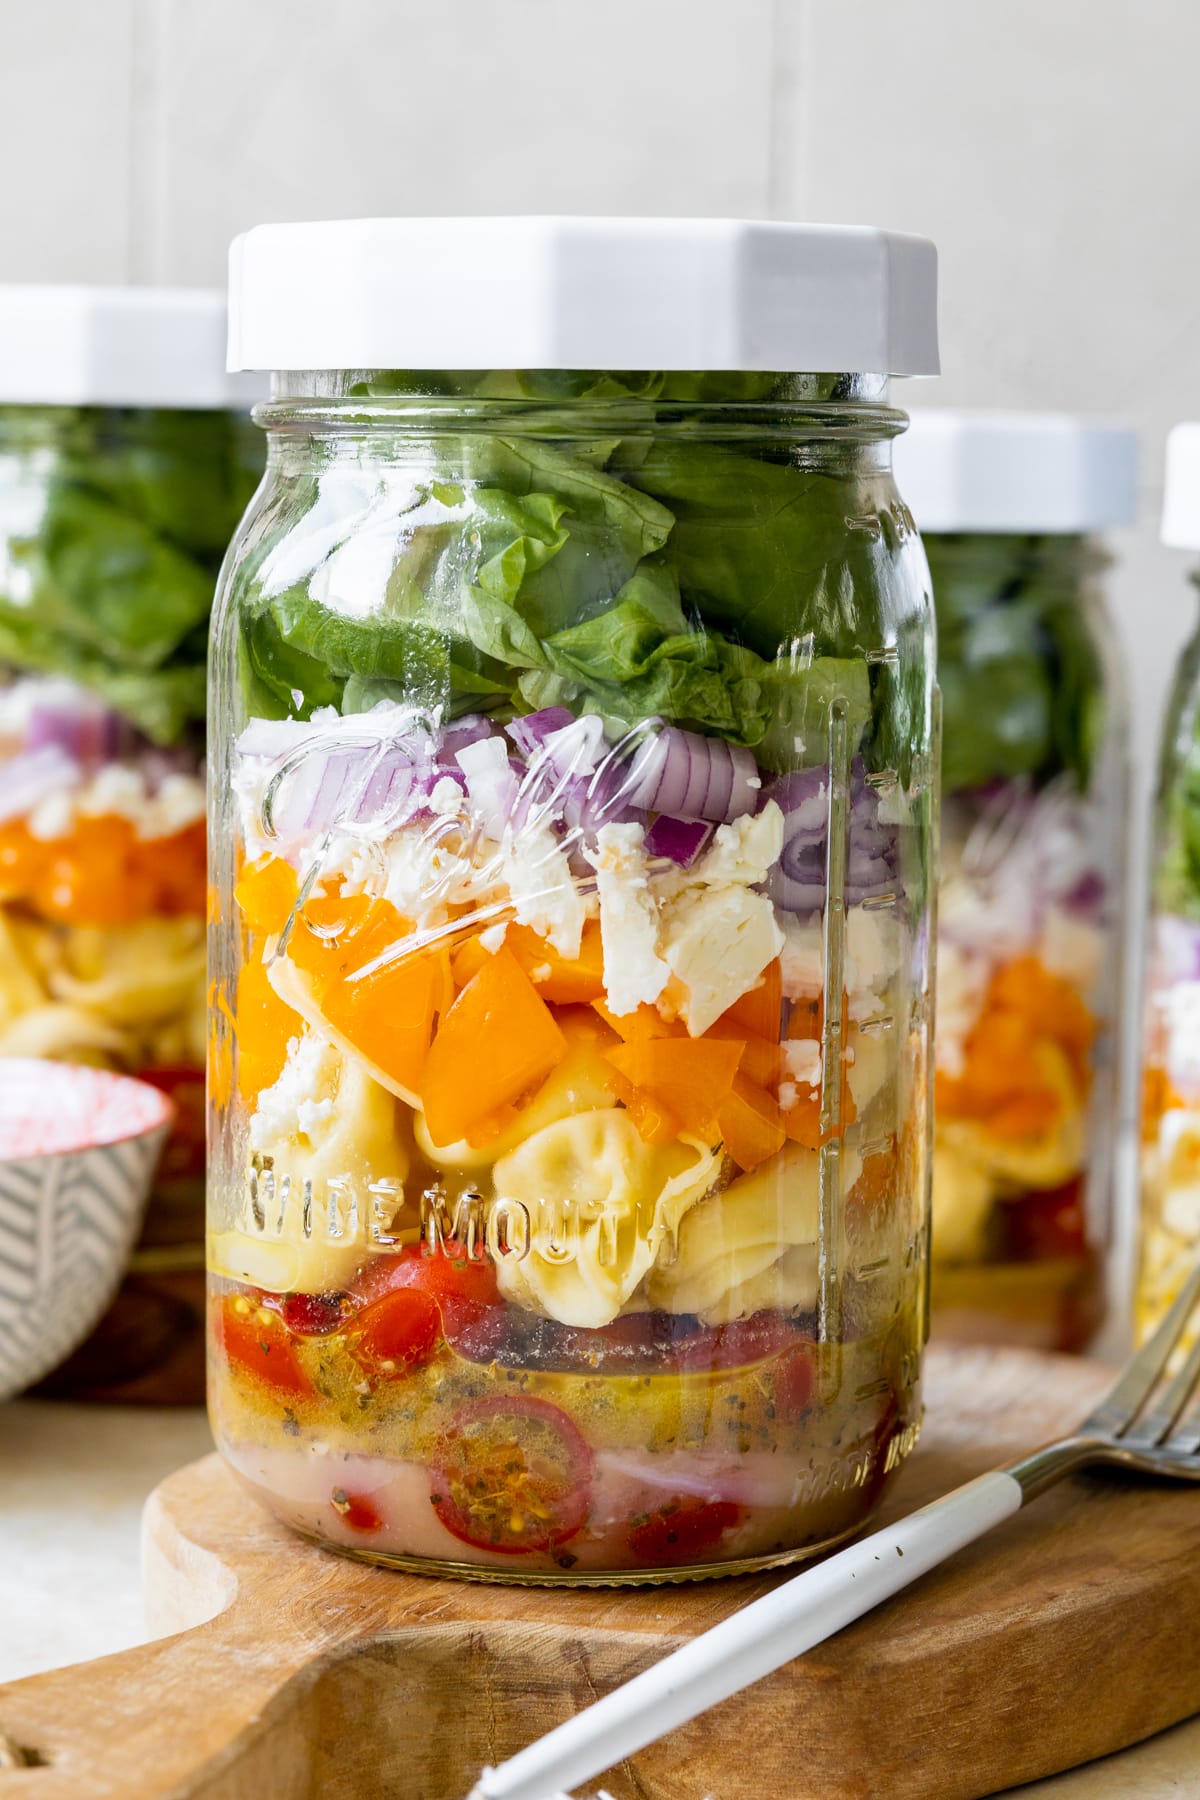 salad in a glass jar. 